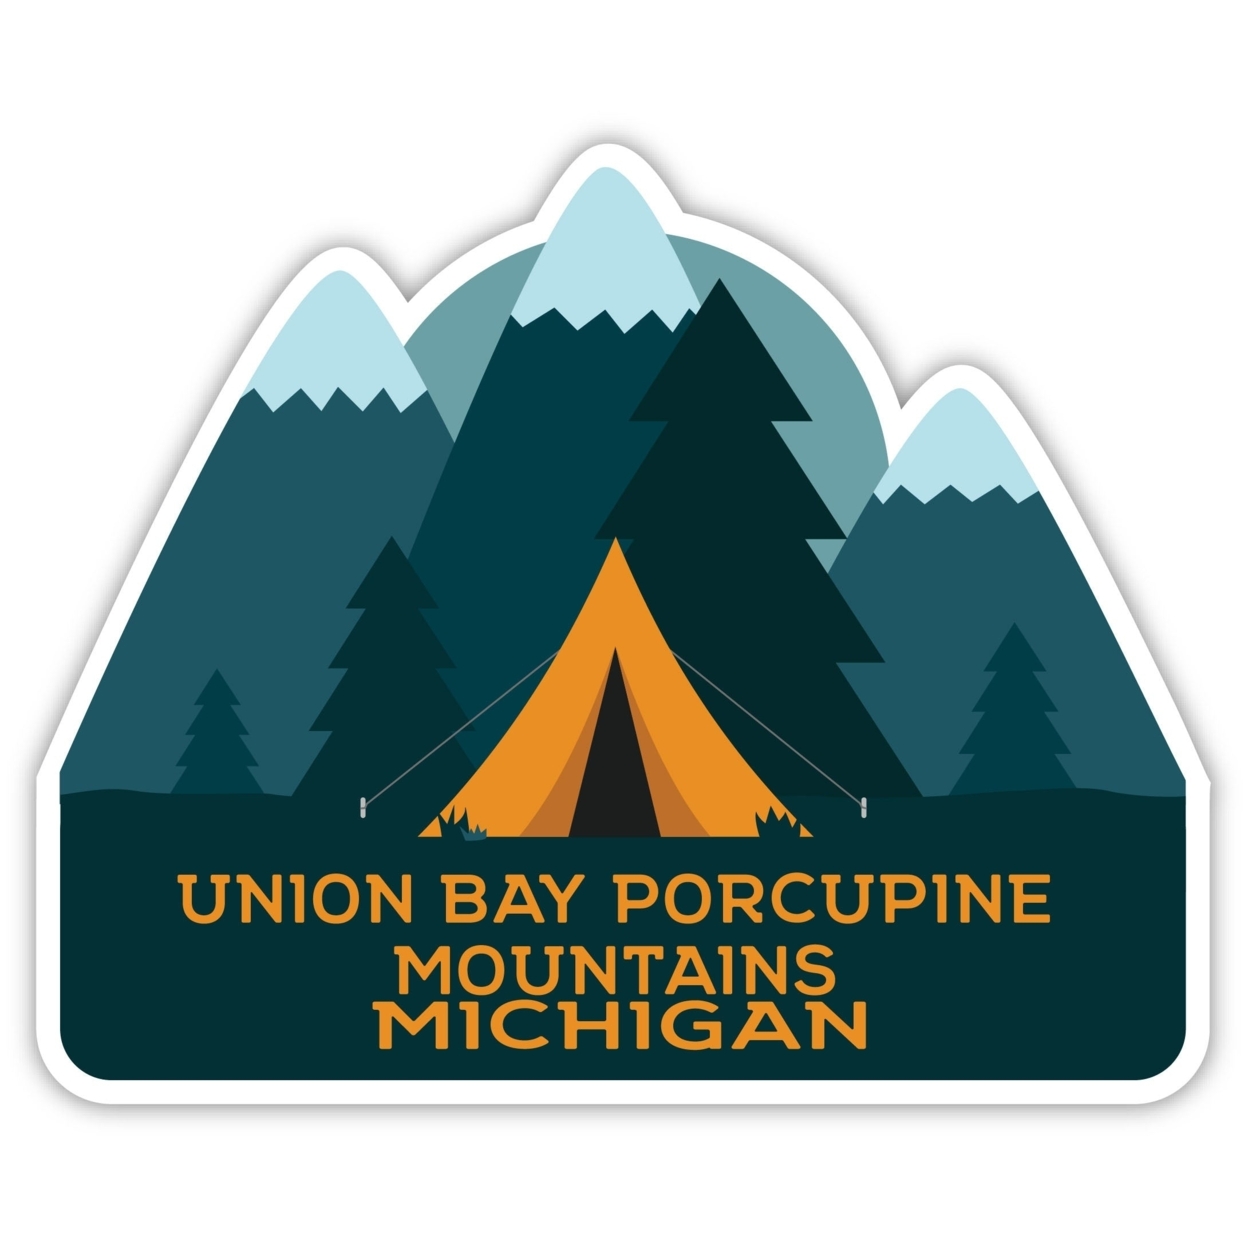 Union Bay Porcupine Mountains Michigan Souvenir Decorative Stickers (Choose Theme And Size) - Single Unit, 2-Inch, Tent